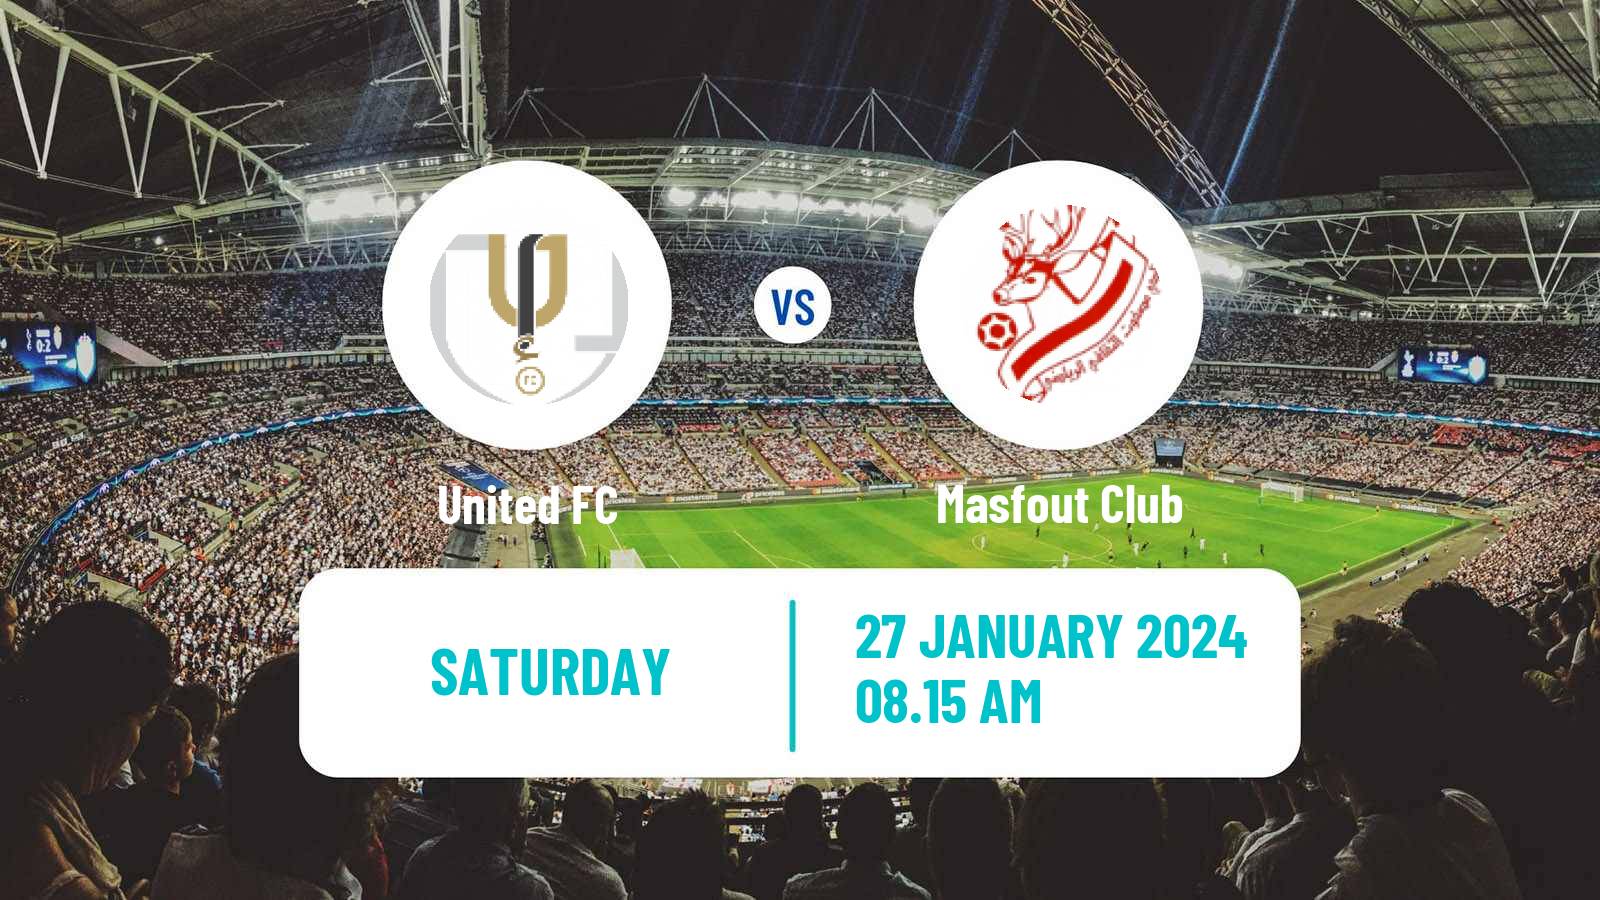 Soccer UAE Division 1 United FC - Masfout